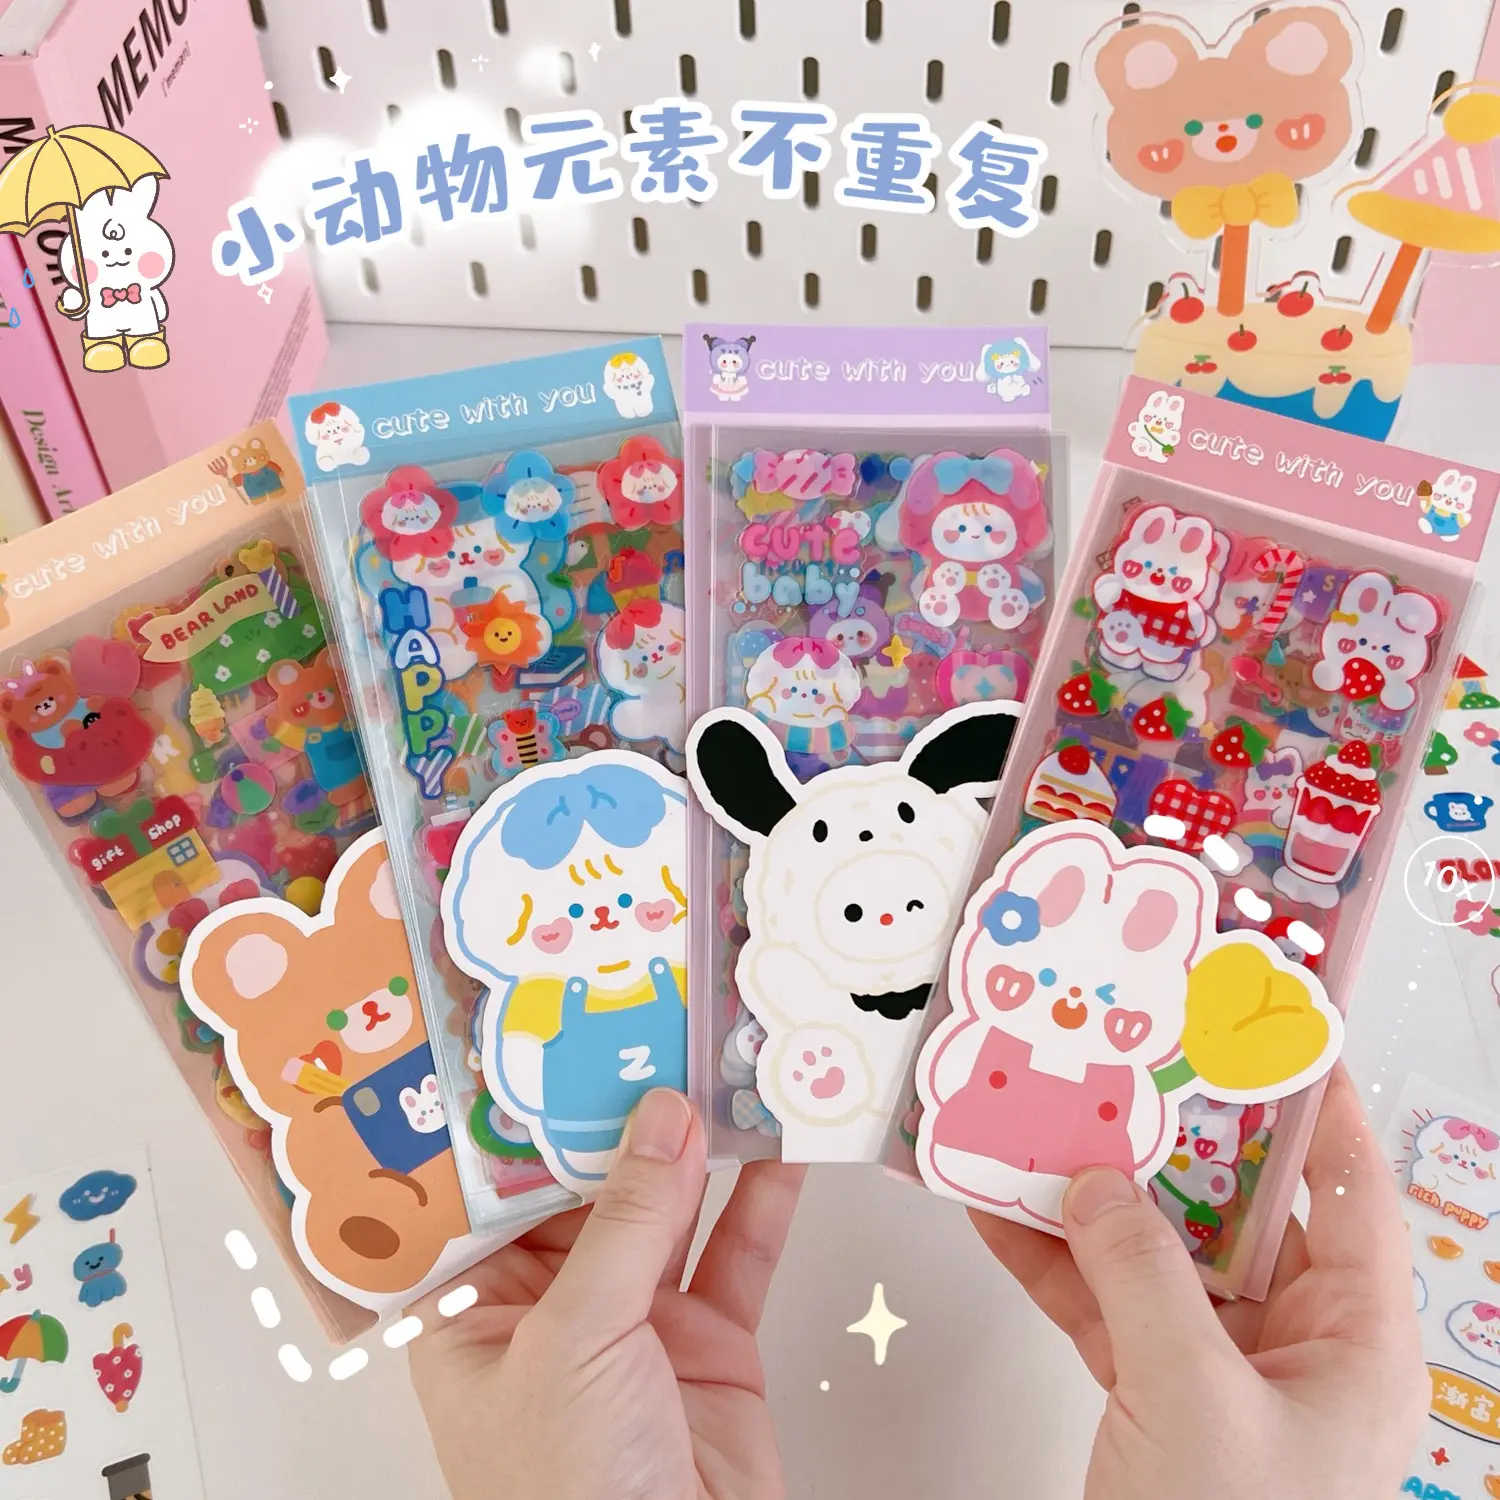 10 Handbill sticker set cute cartoon handbill sticker material decorative pattern gift bag tide